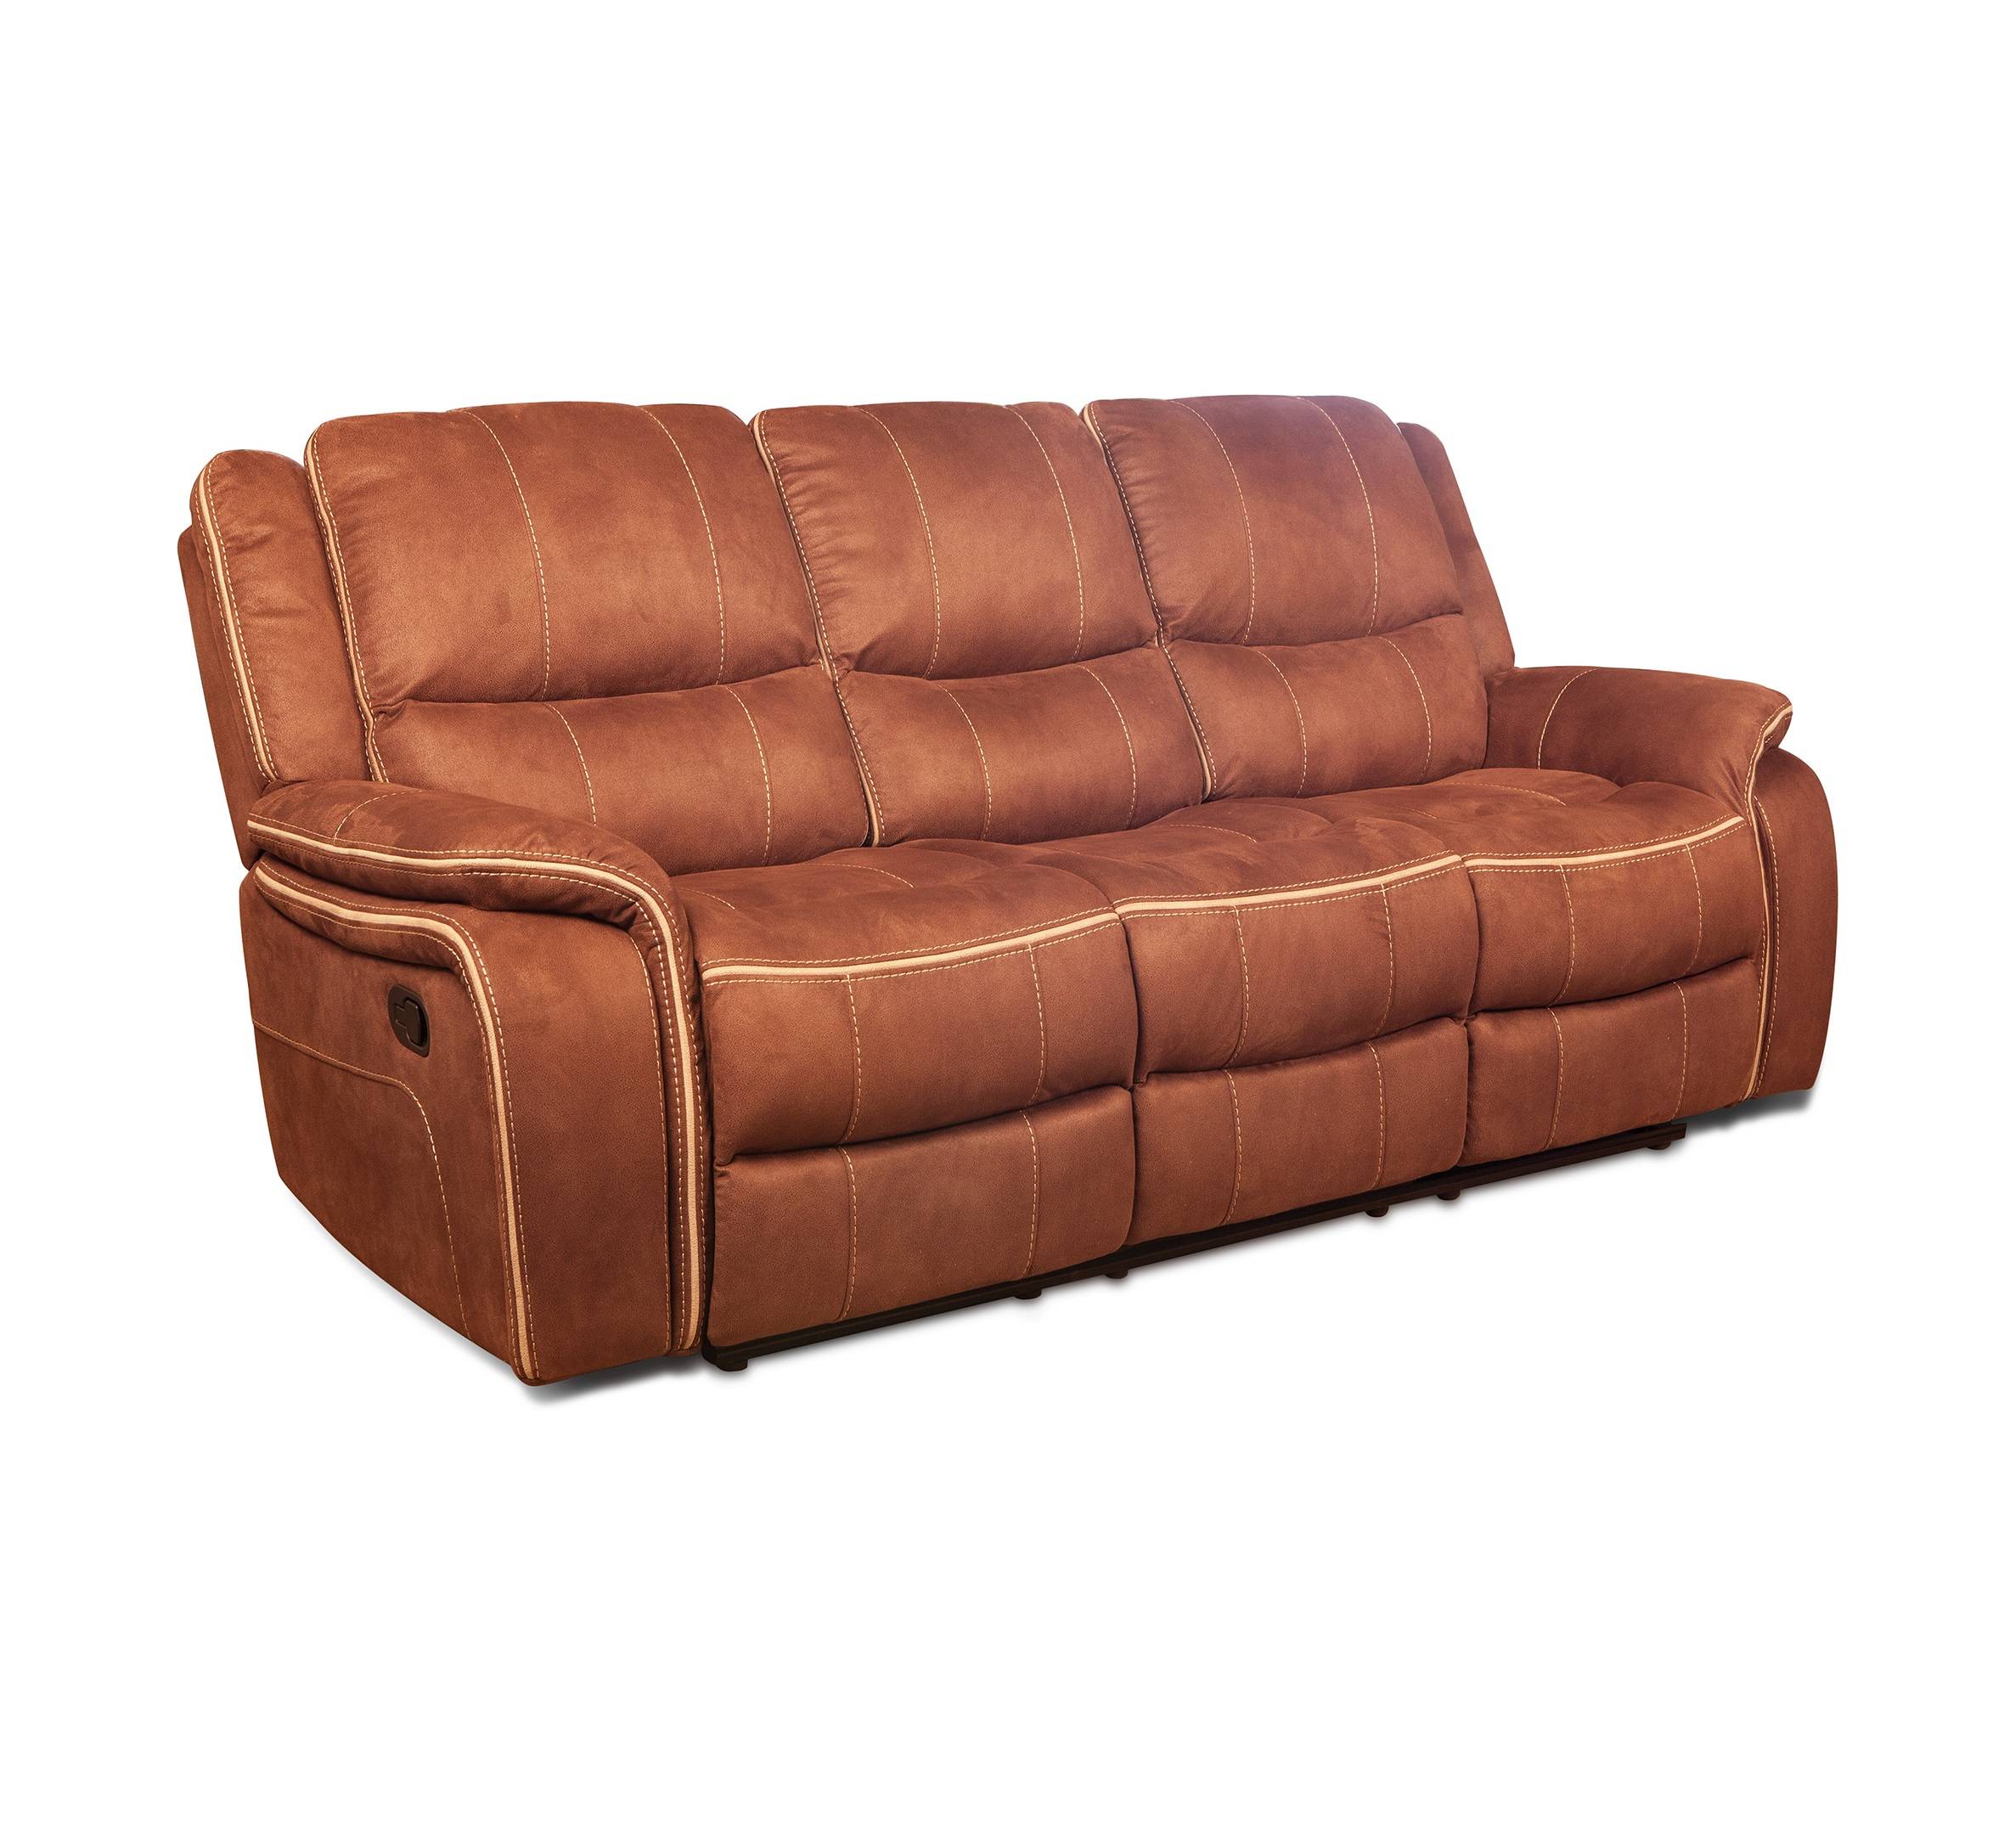 Super Purchasing for Recliner Sofa In Purple - Modern orange fabric recliner 3+2+1 home cinema sofa fabric – Chuan Yang